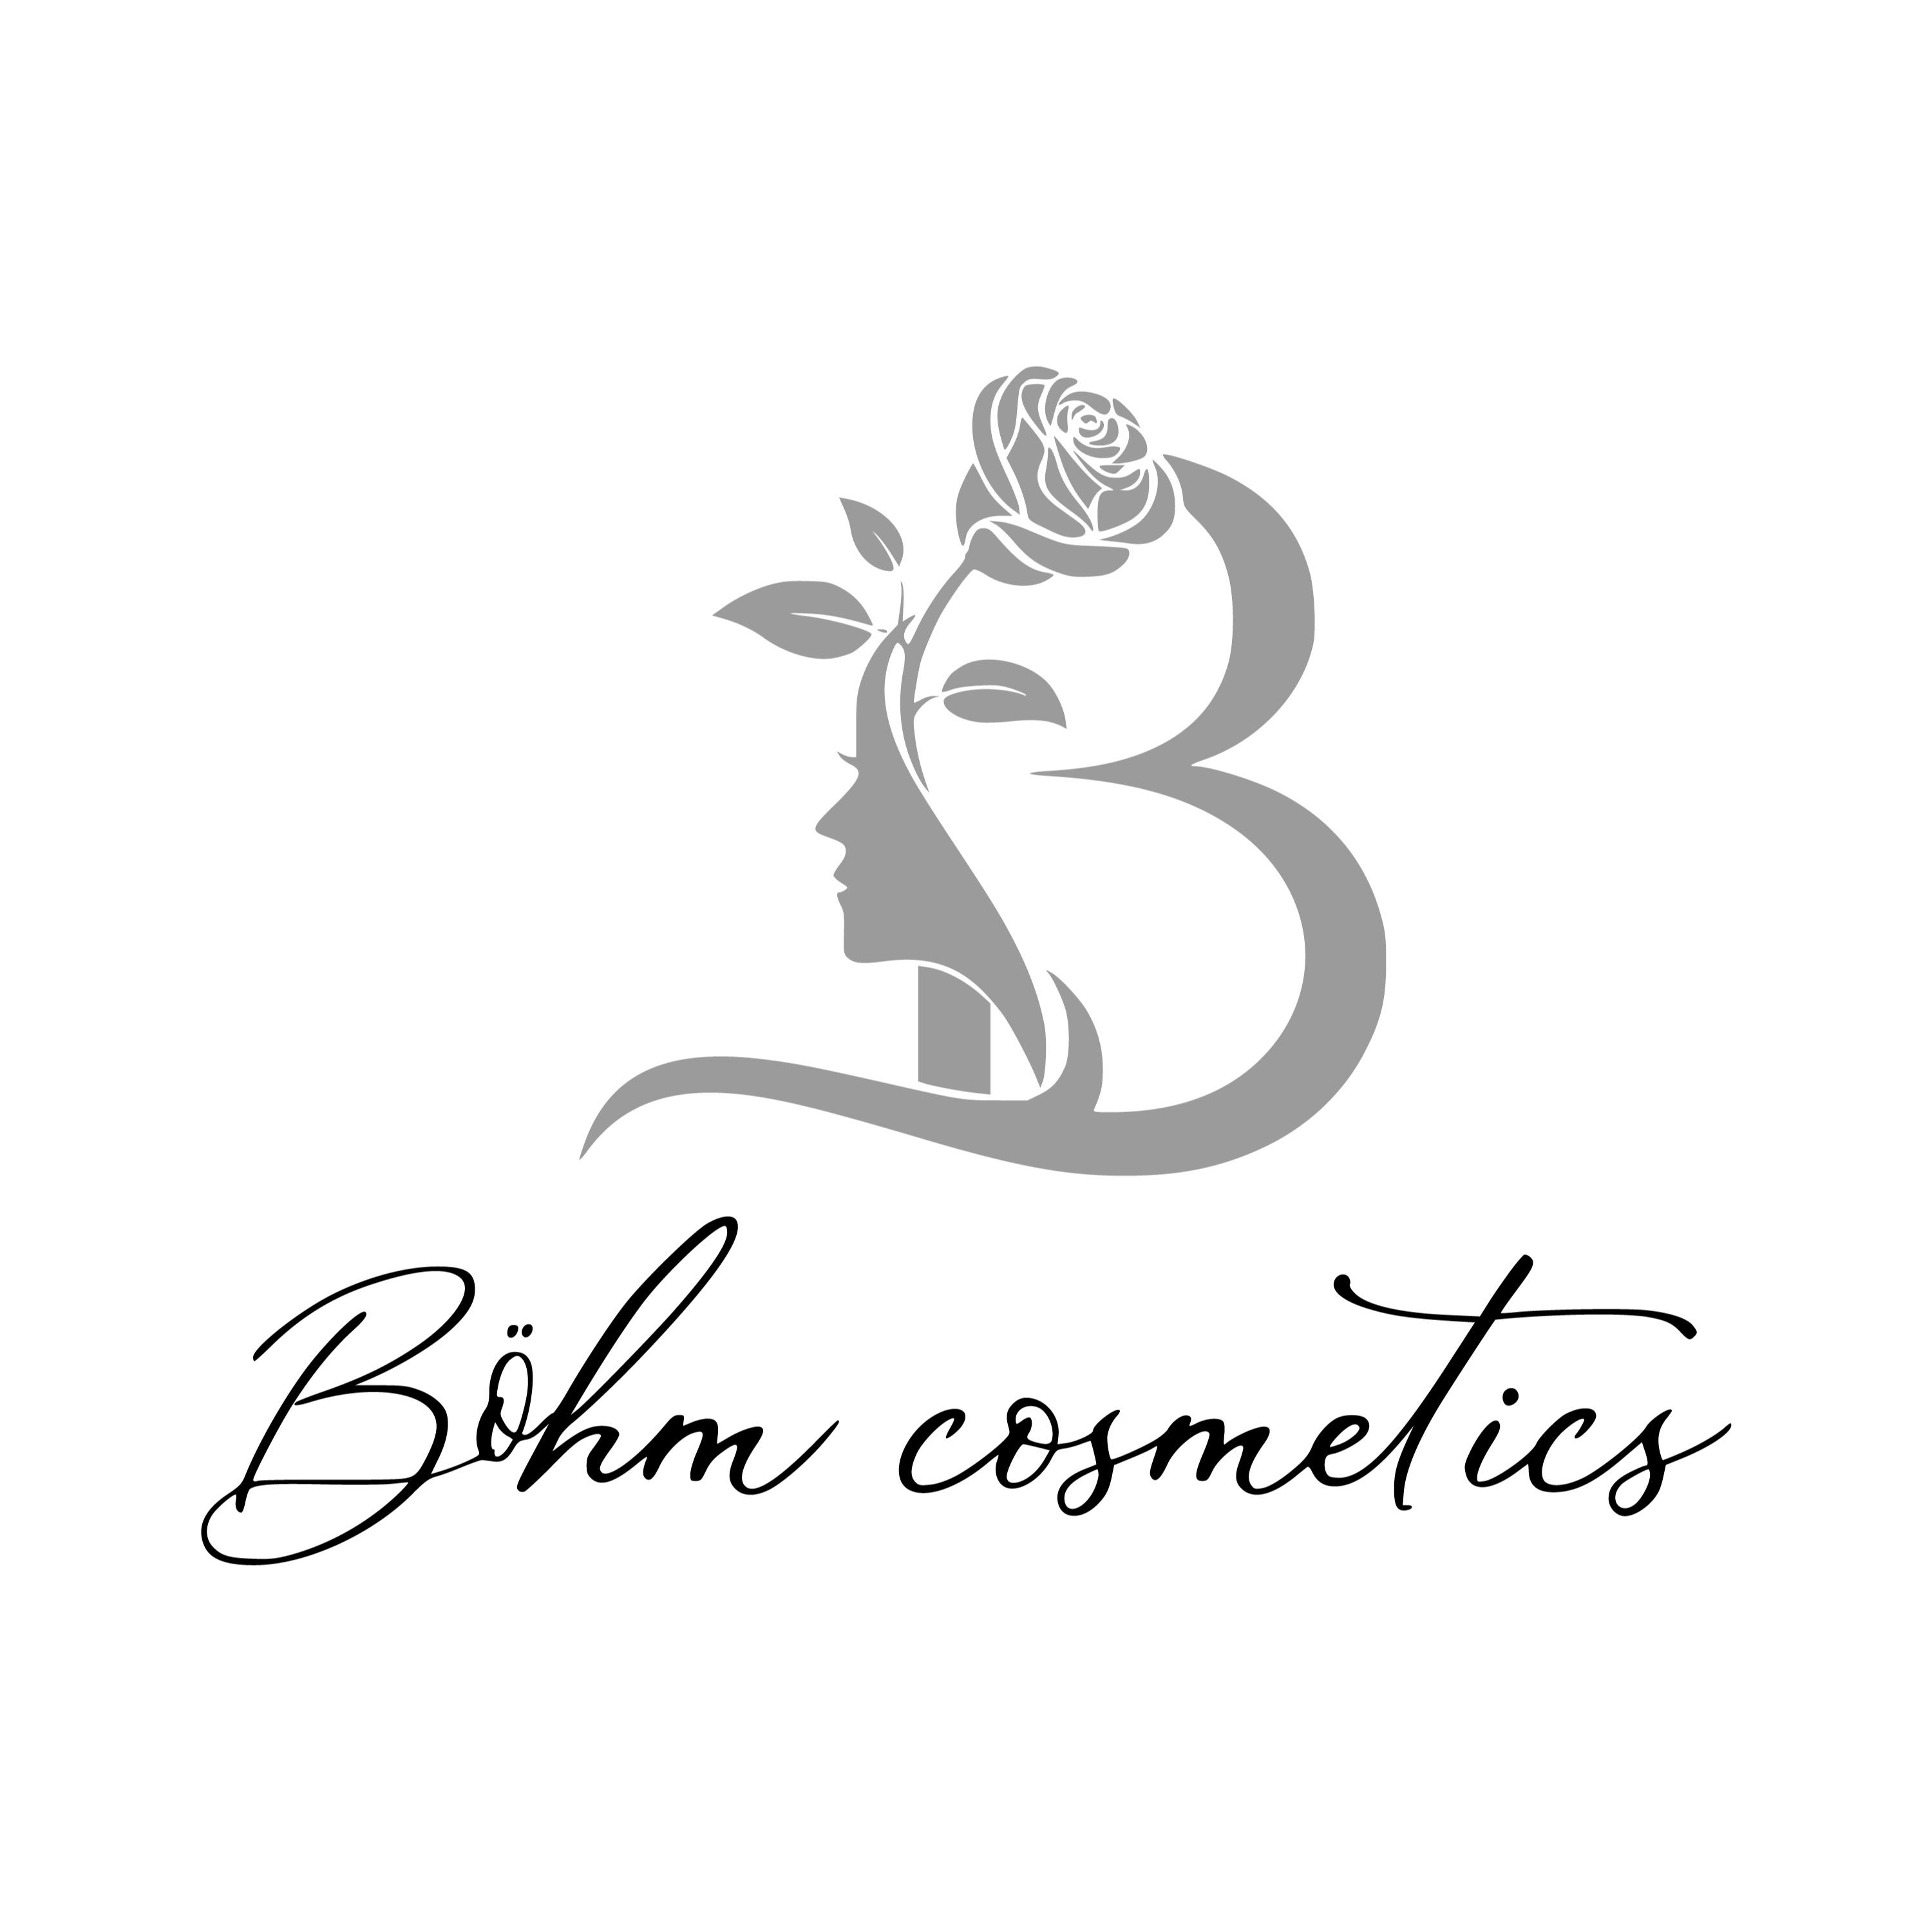 Böhm cosmetics - Kosmetikstudio München in München - Logo